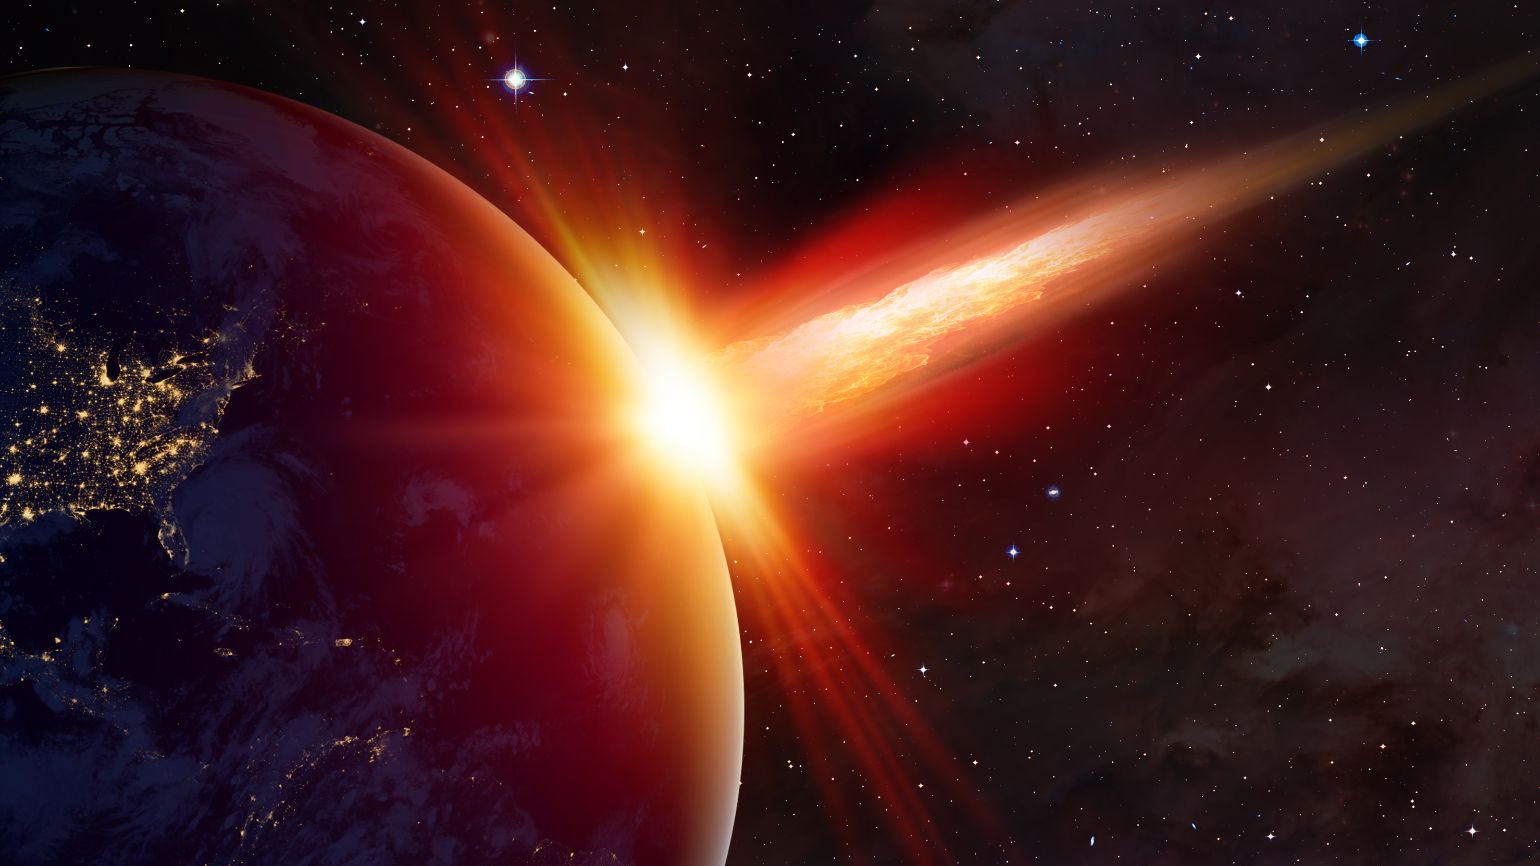 aszteroida, NASA, világűr, űr, Föld, Shutterstock